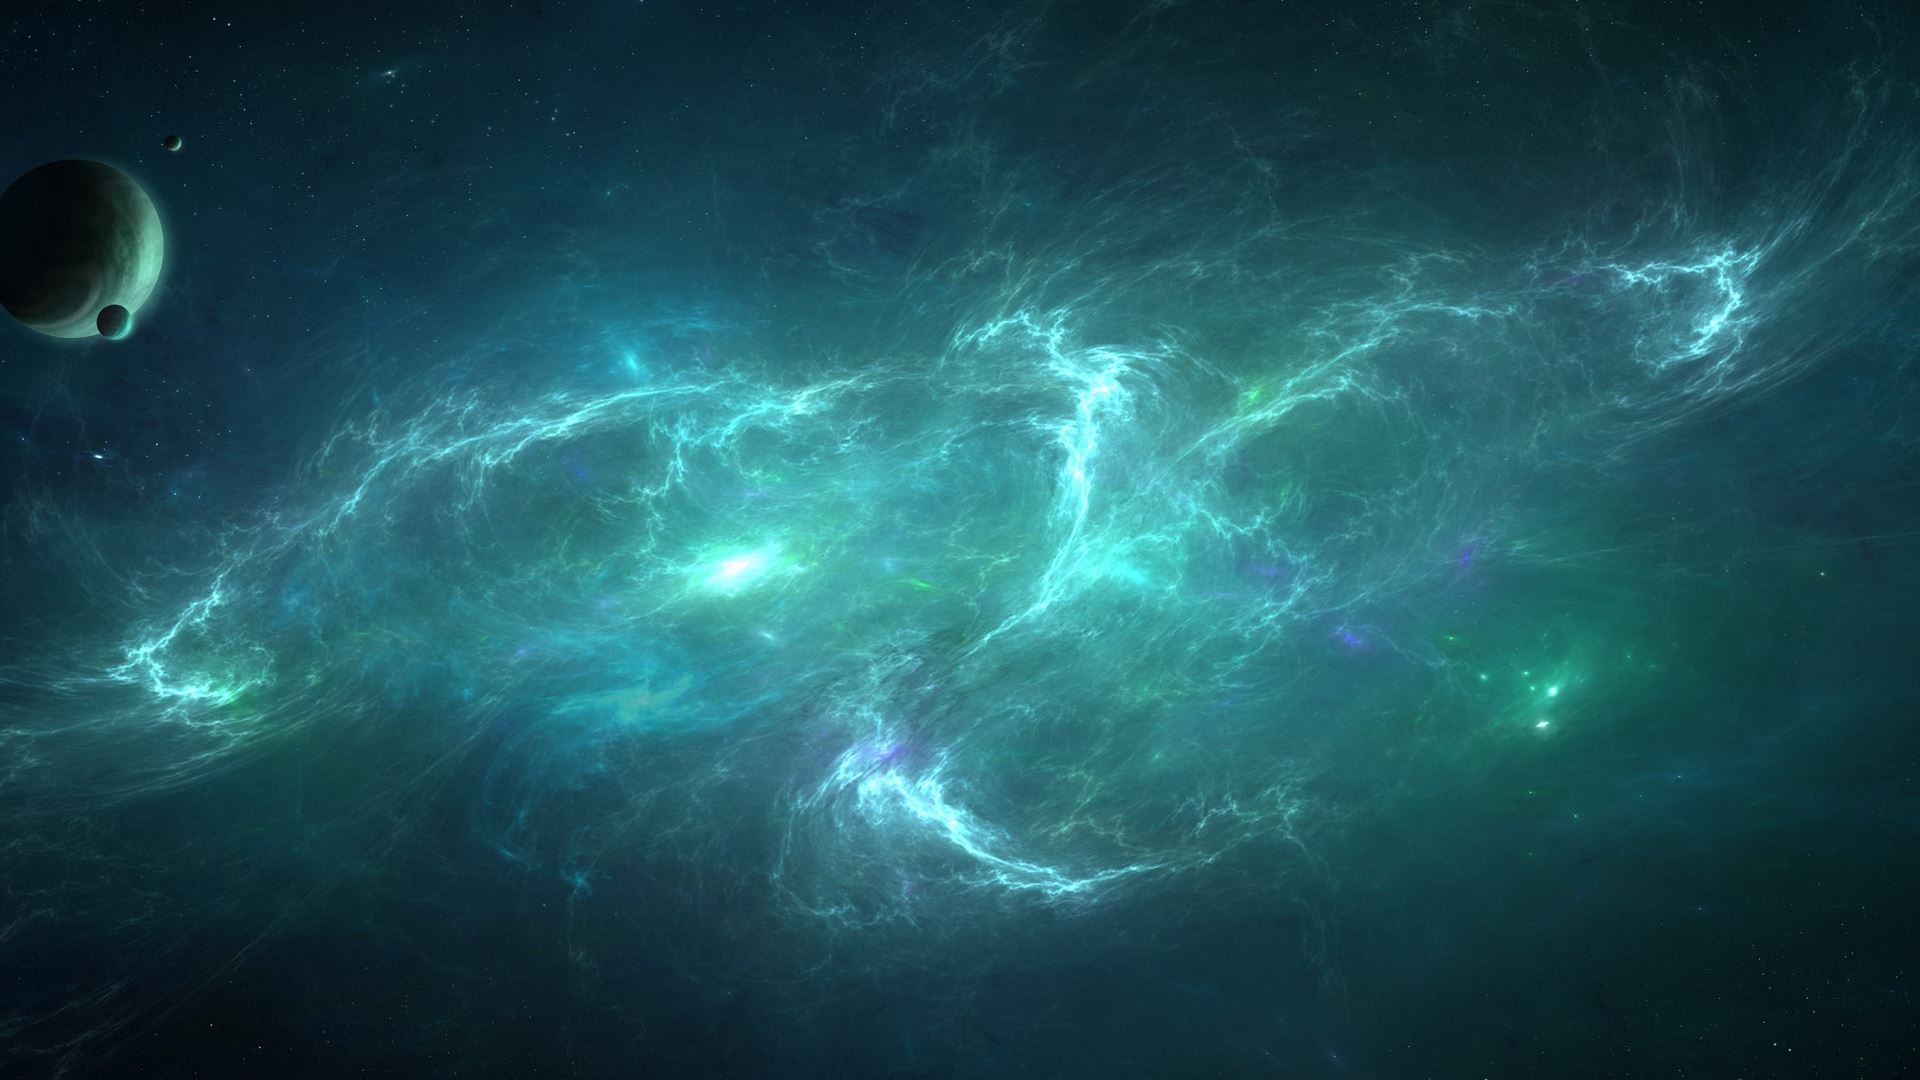 Galactic Nebula 1 Mac Wallpaper Download | Free Mac Wallpapers Download